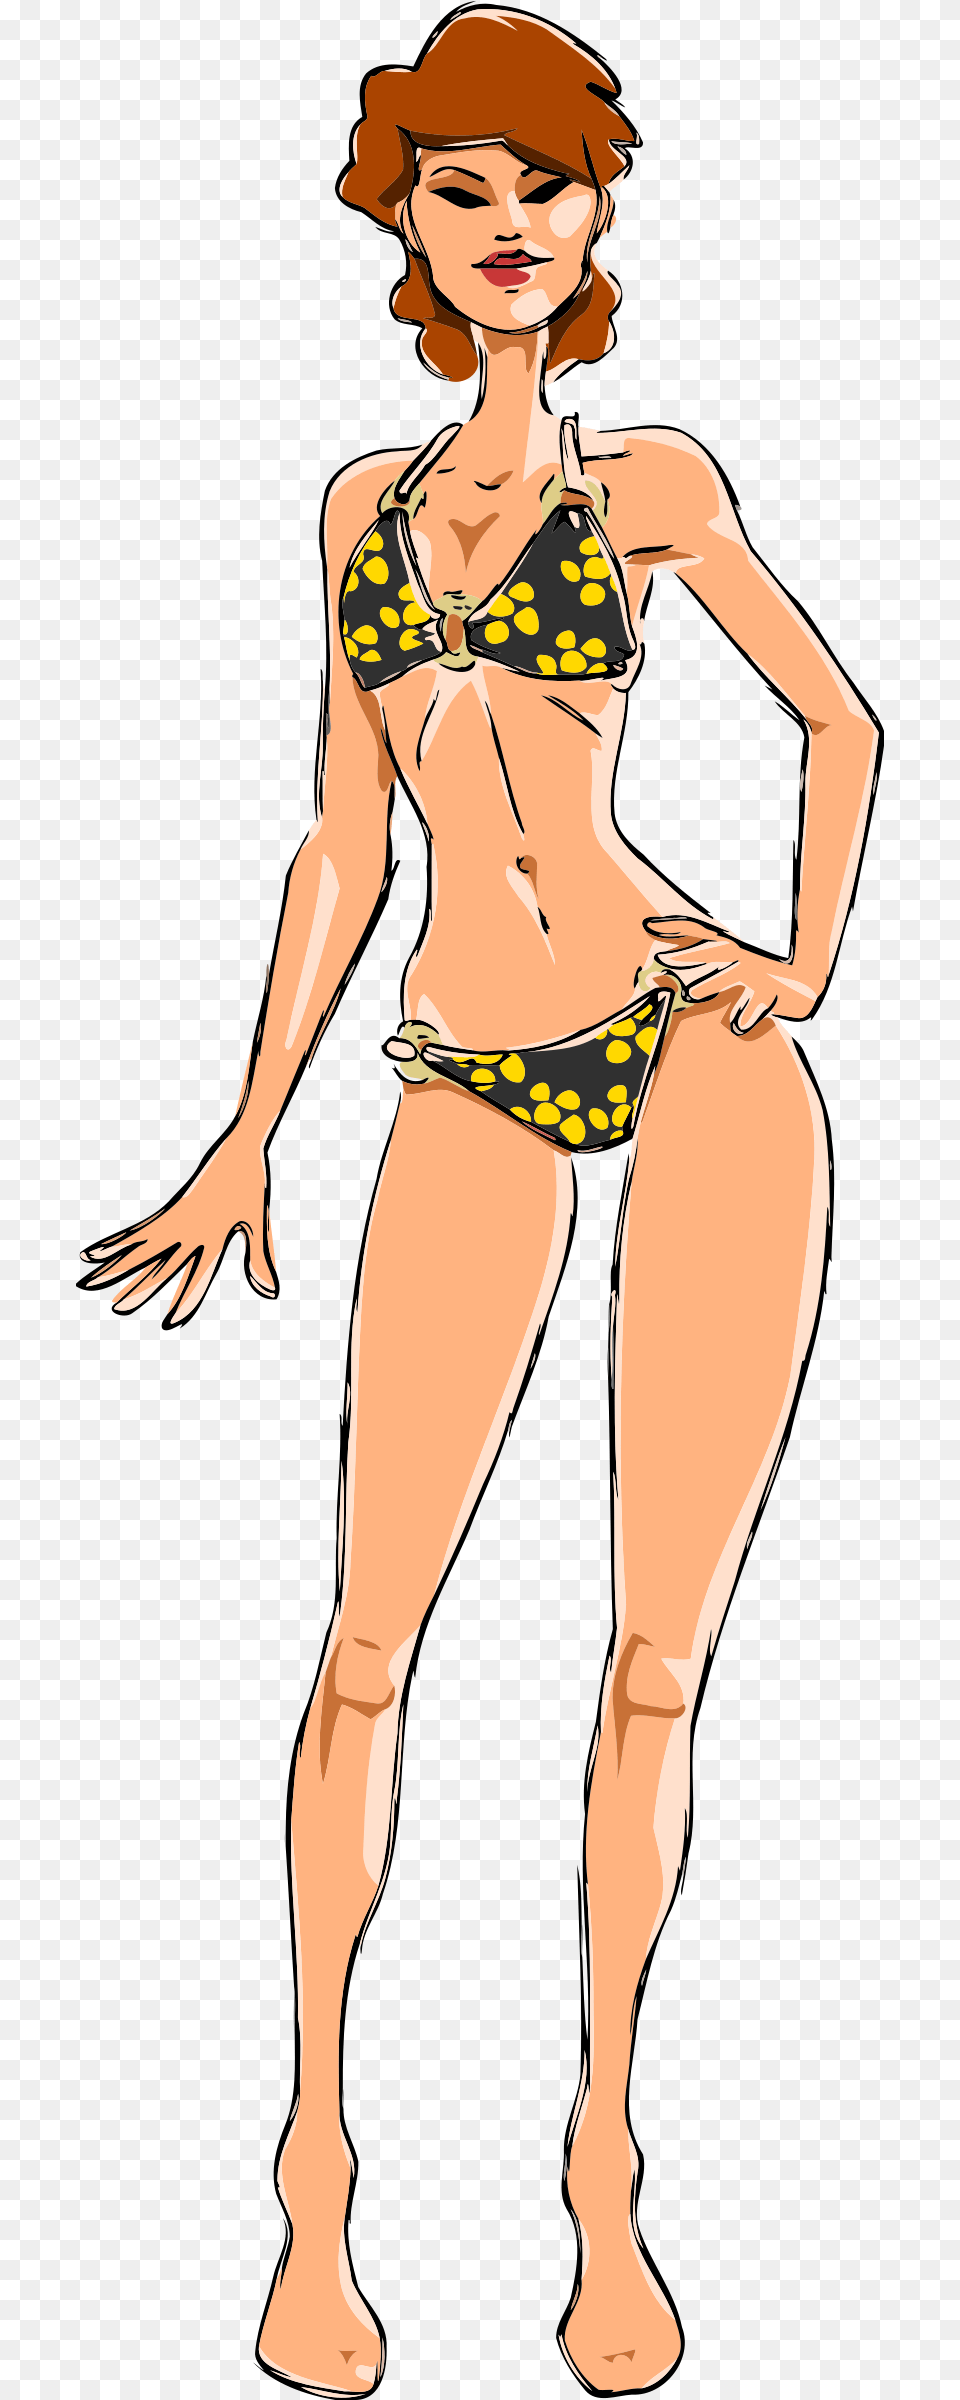 Woman In Bikini 3 Clip Arts Clip Art Of Women In Bikini, Clothing, Swimwear, Adult, Female Png Image